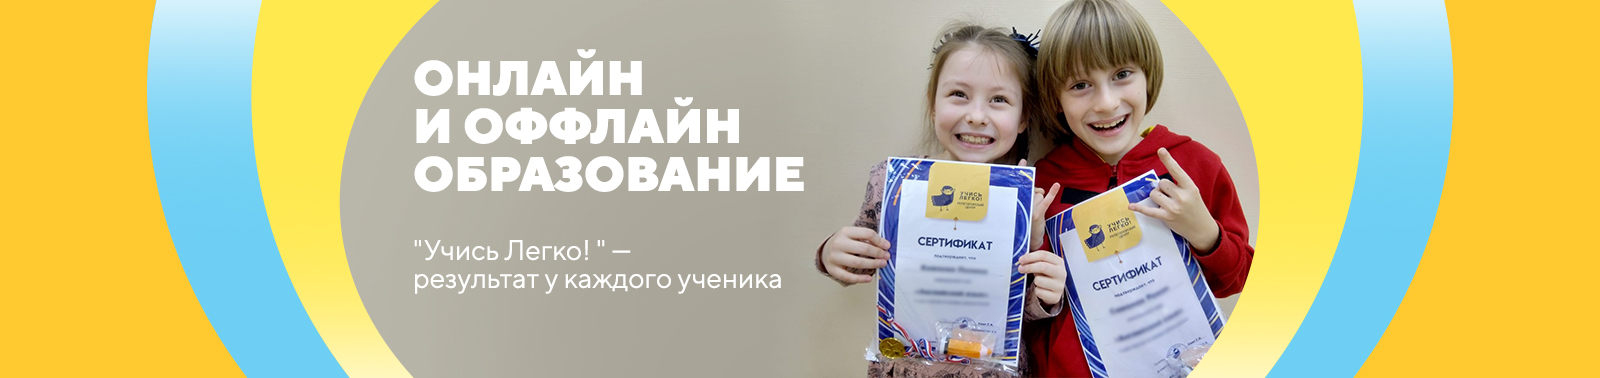 uchimlegko.ru - Курсы для школьников